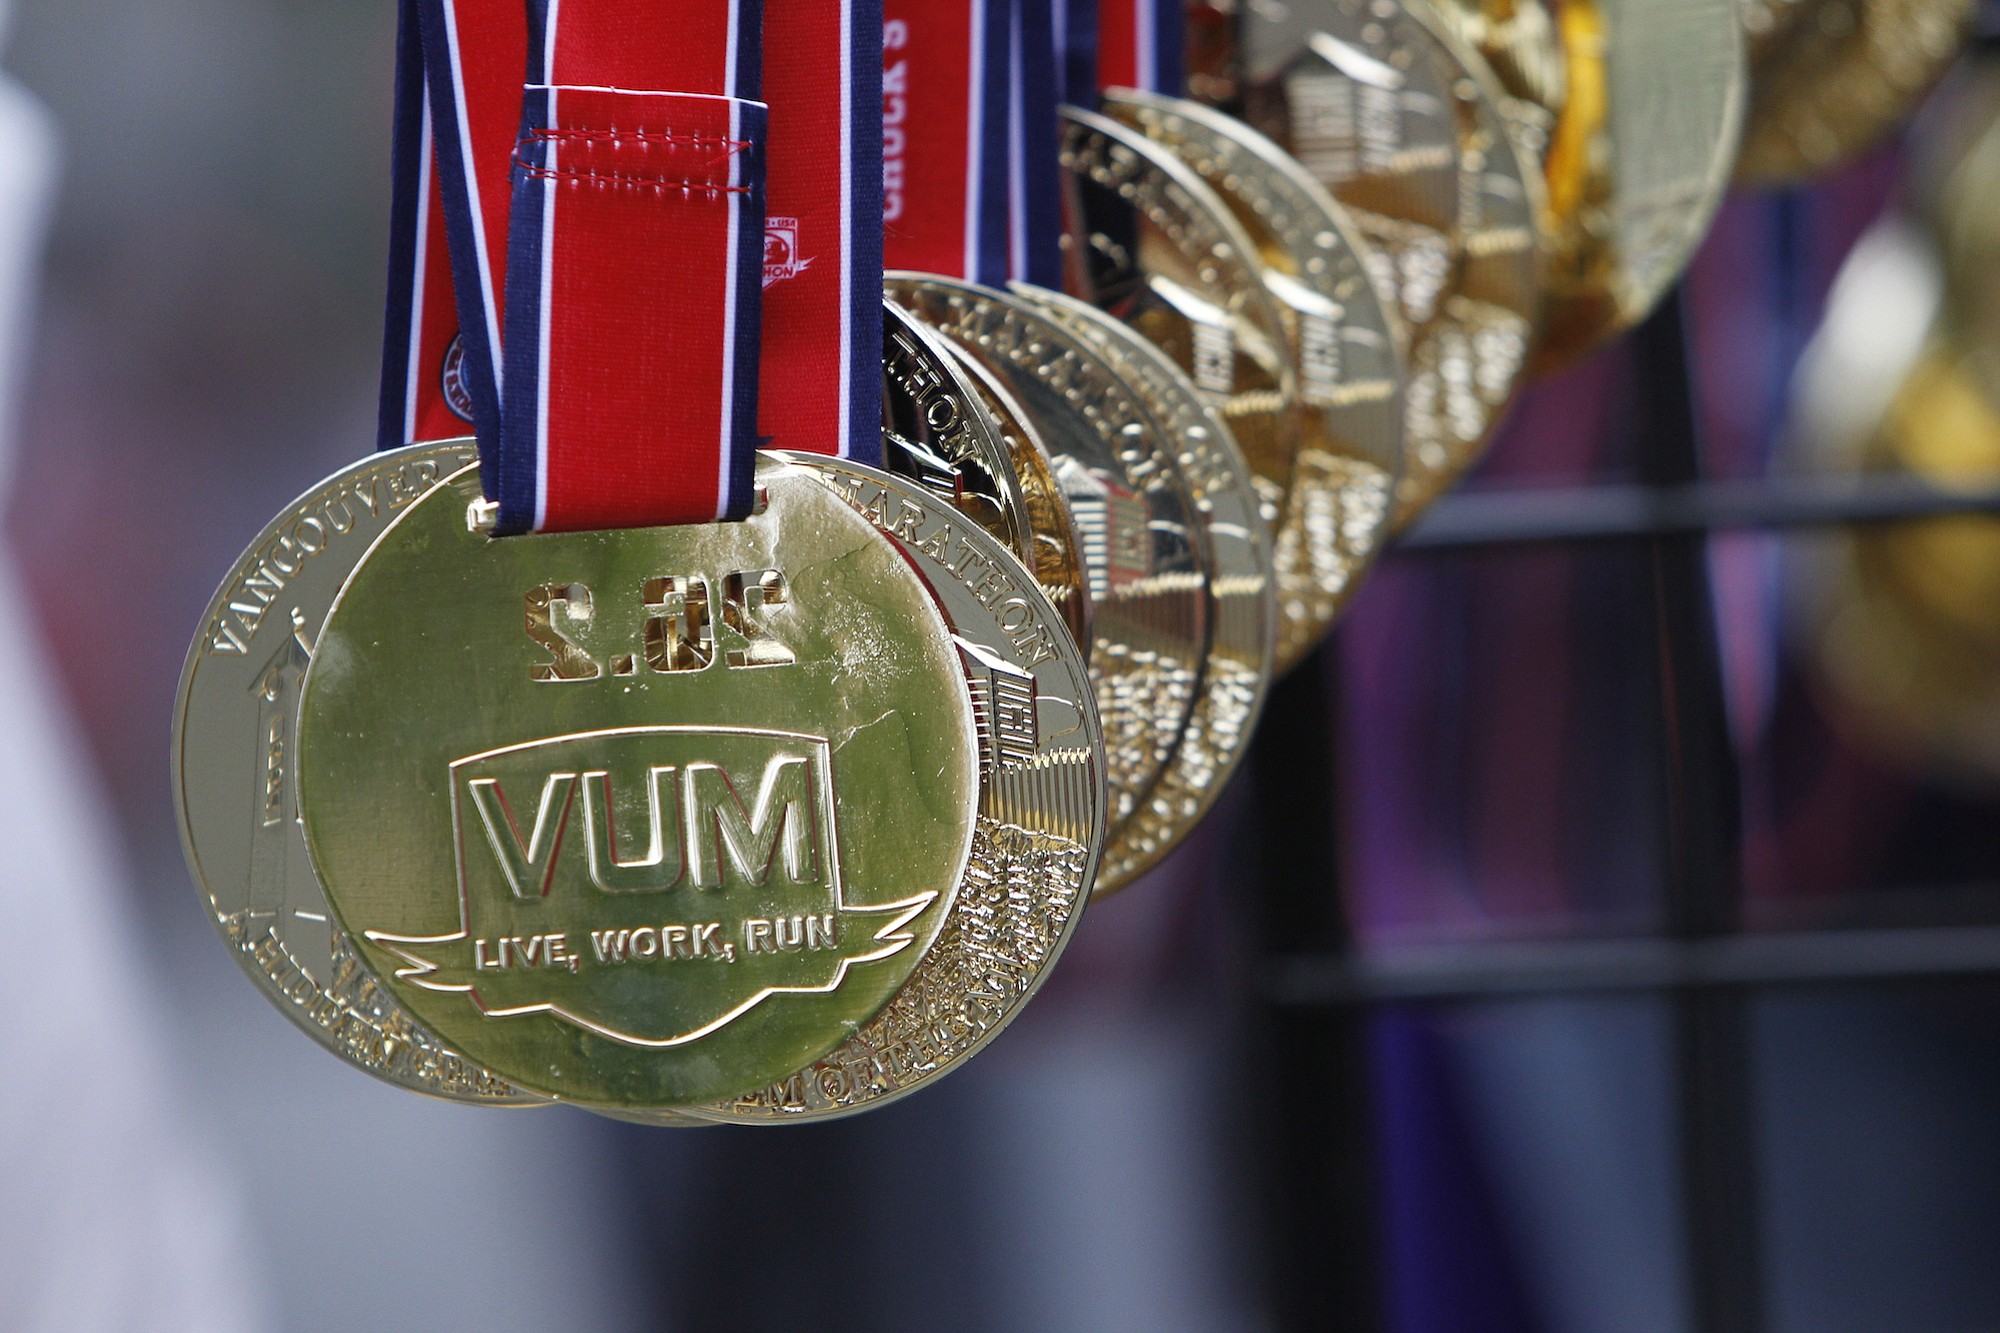 2014 Vancouver Marathon medals.